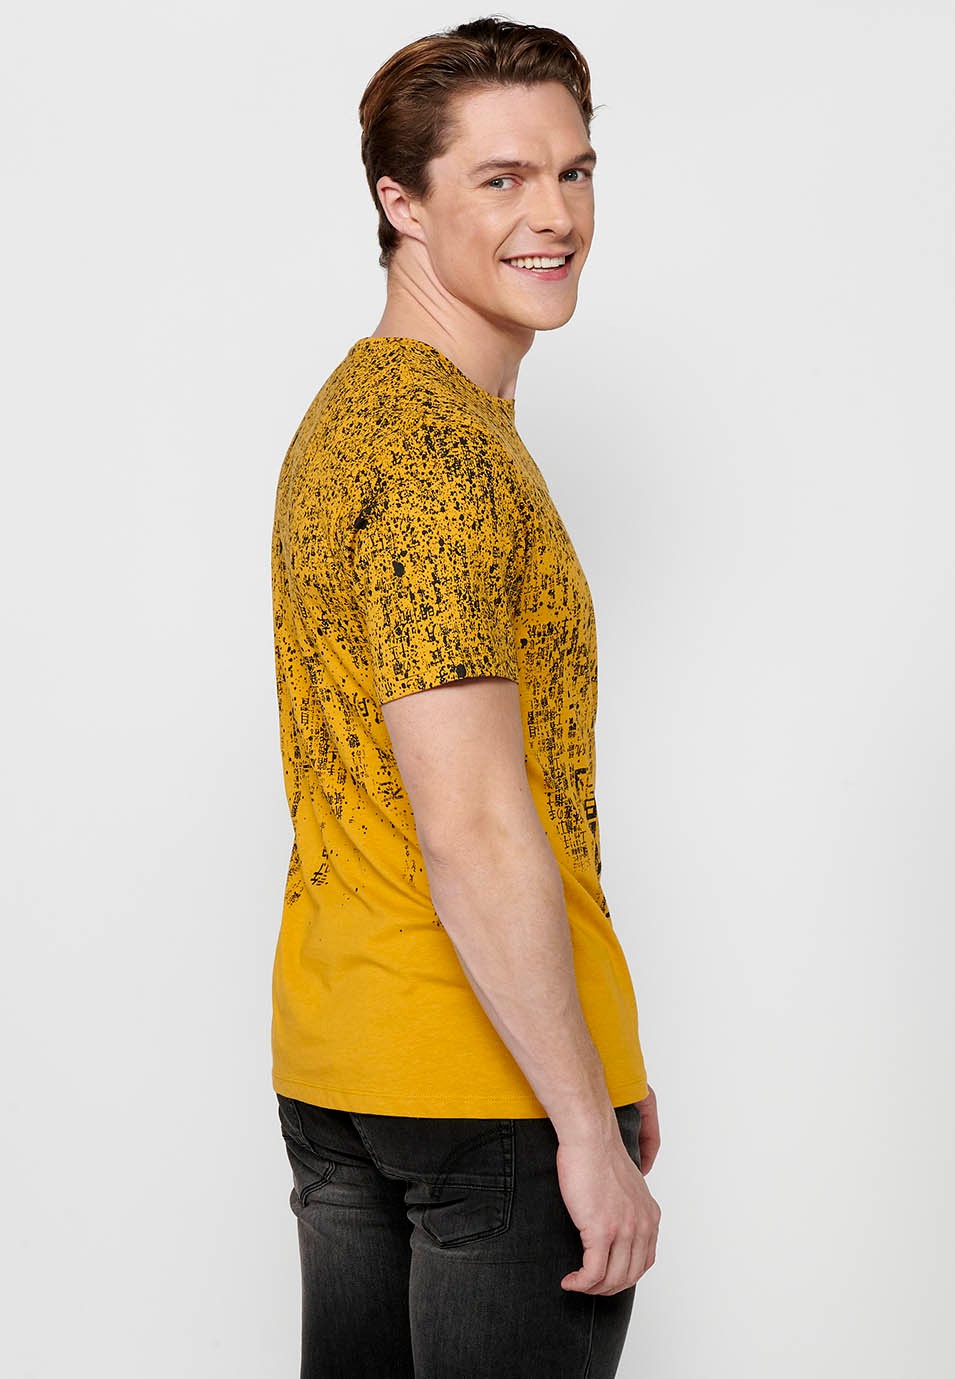 Camiseta de manga corta de algodón, color amarillo para hombre 3